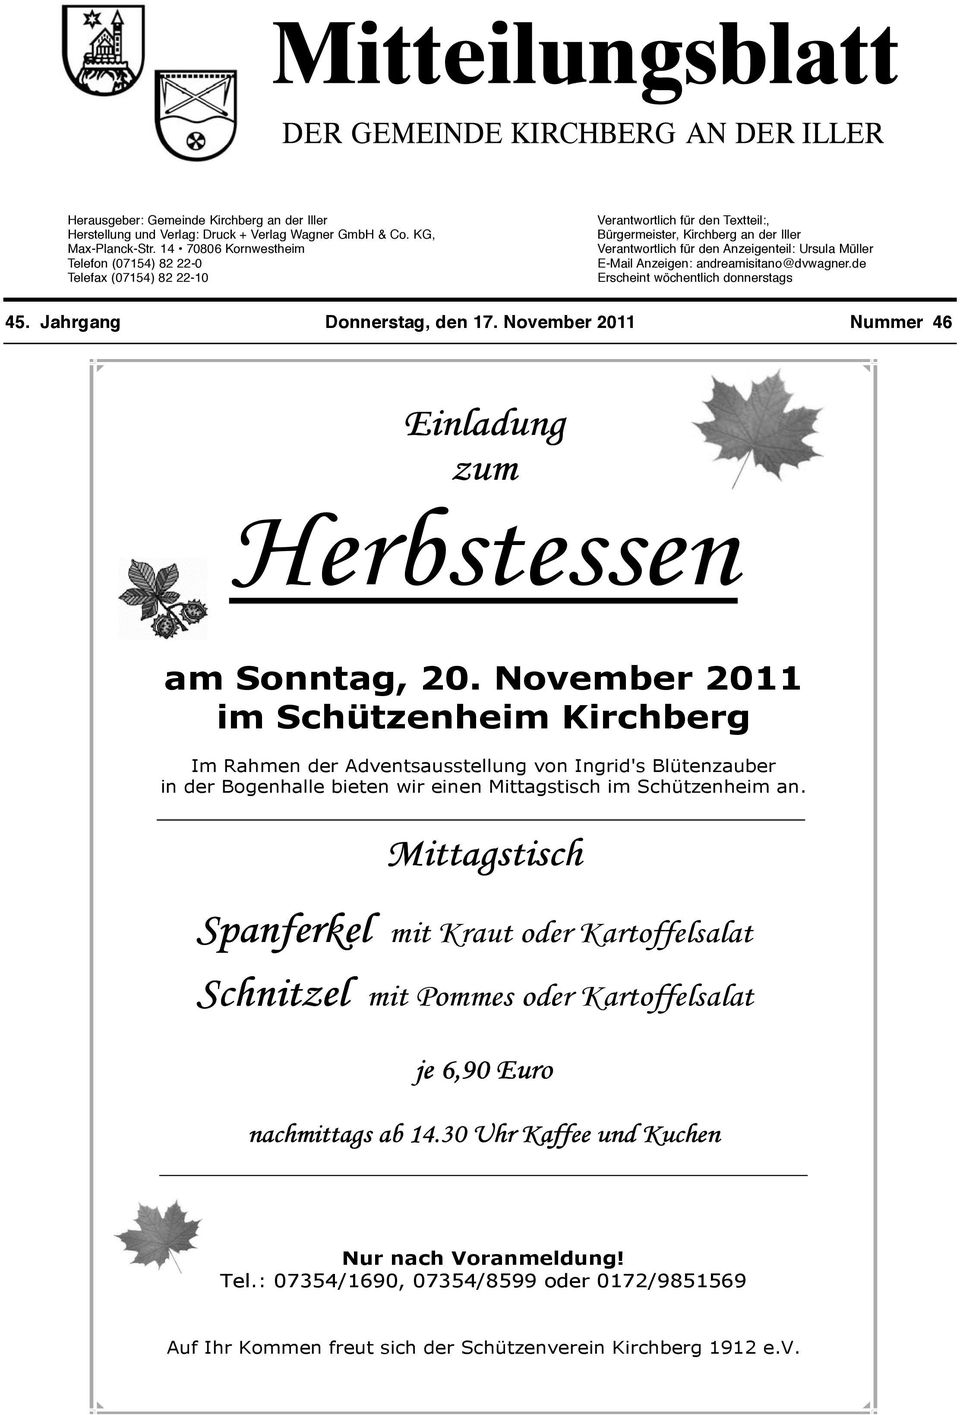 E-Mail Anzeigen: andreamisitano@dvwagner.de Erscheint wöchentlich donnerstags 45. Jahrgang Donnerstag, den 17. November 2011 Nummer 46 Einladung zum Herbstessen am Sonntag, 20.